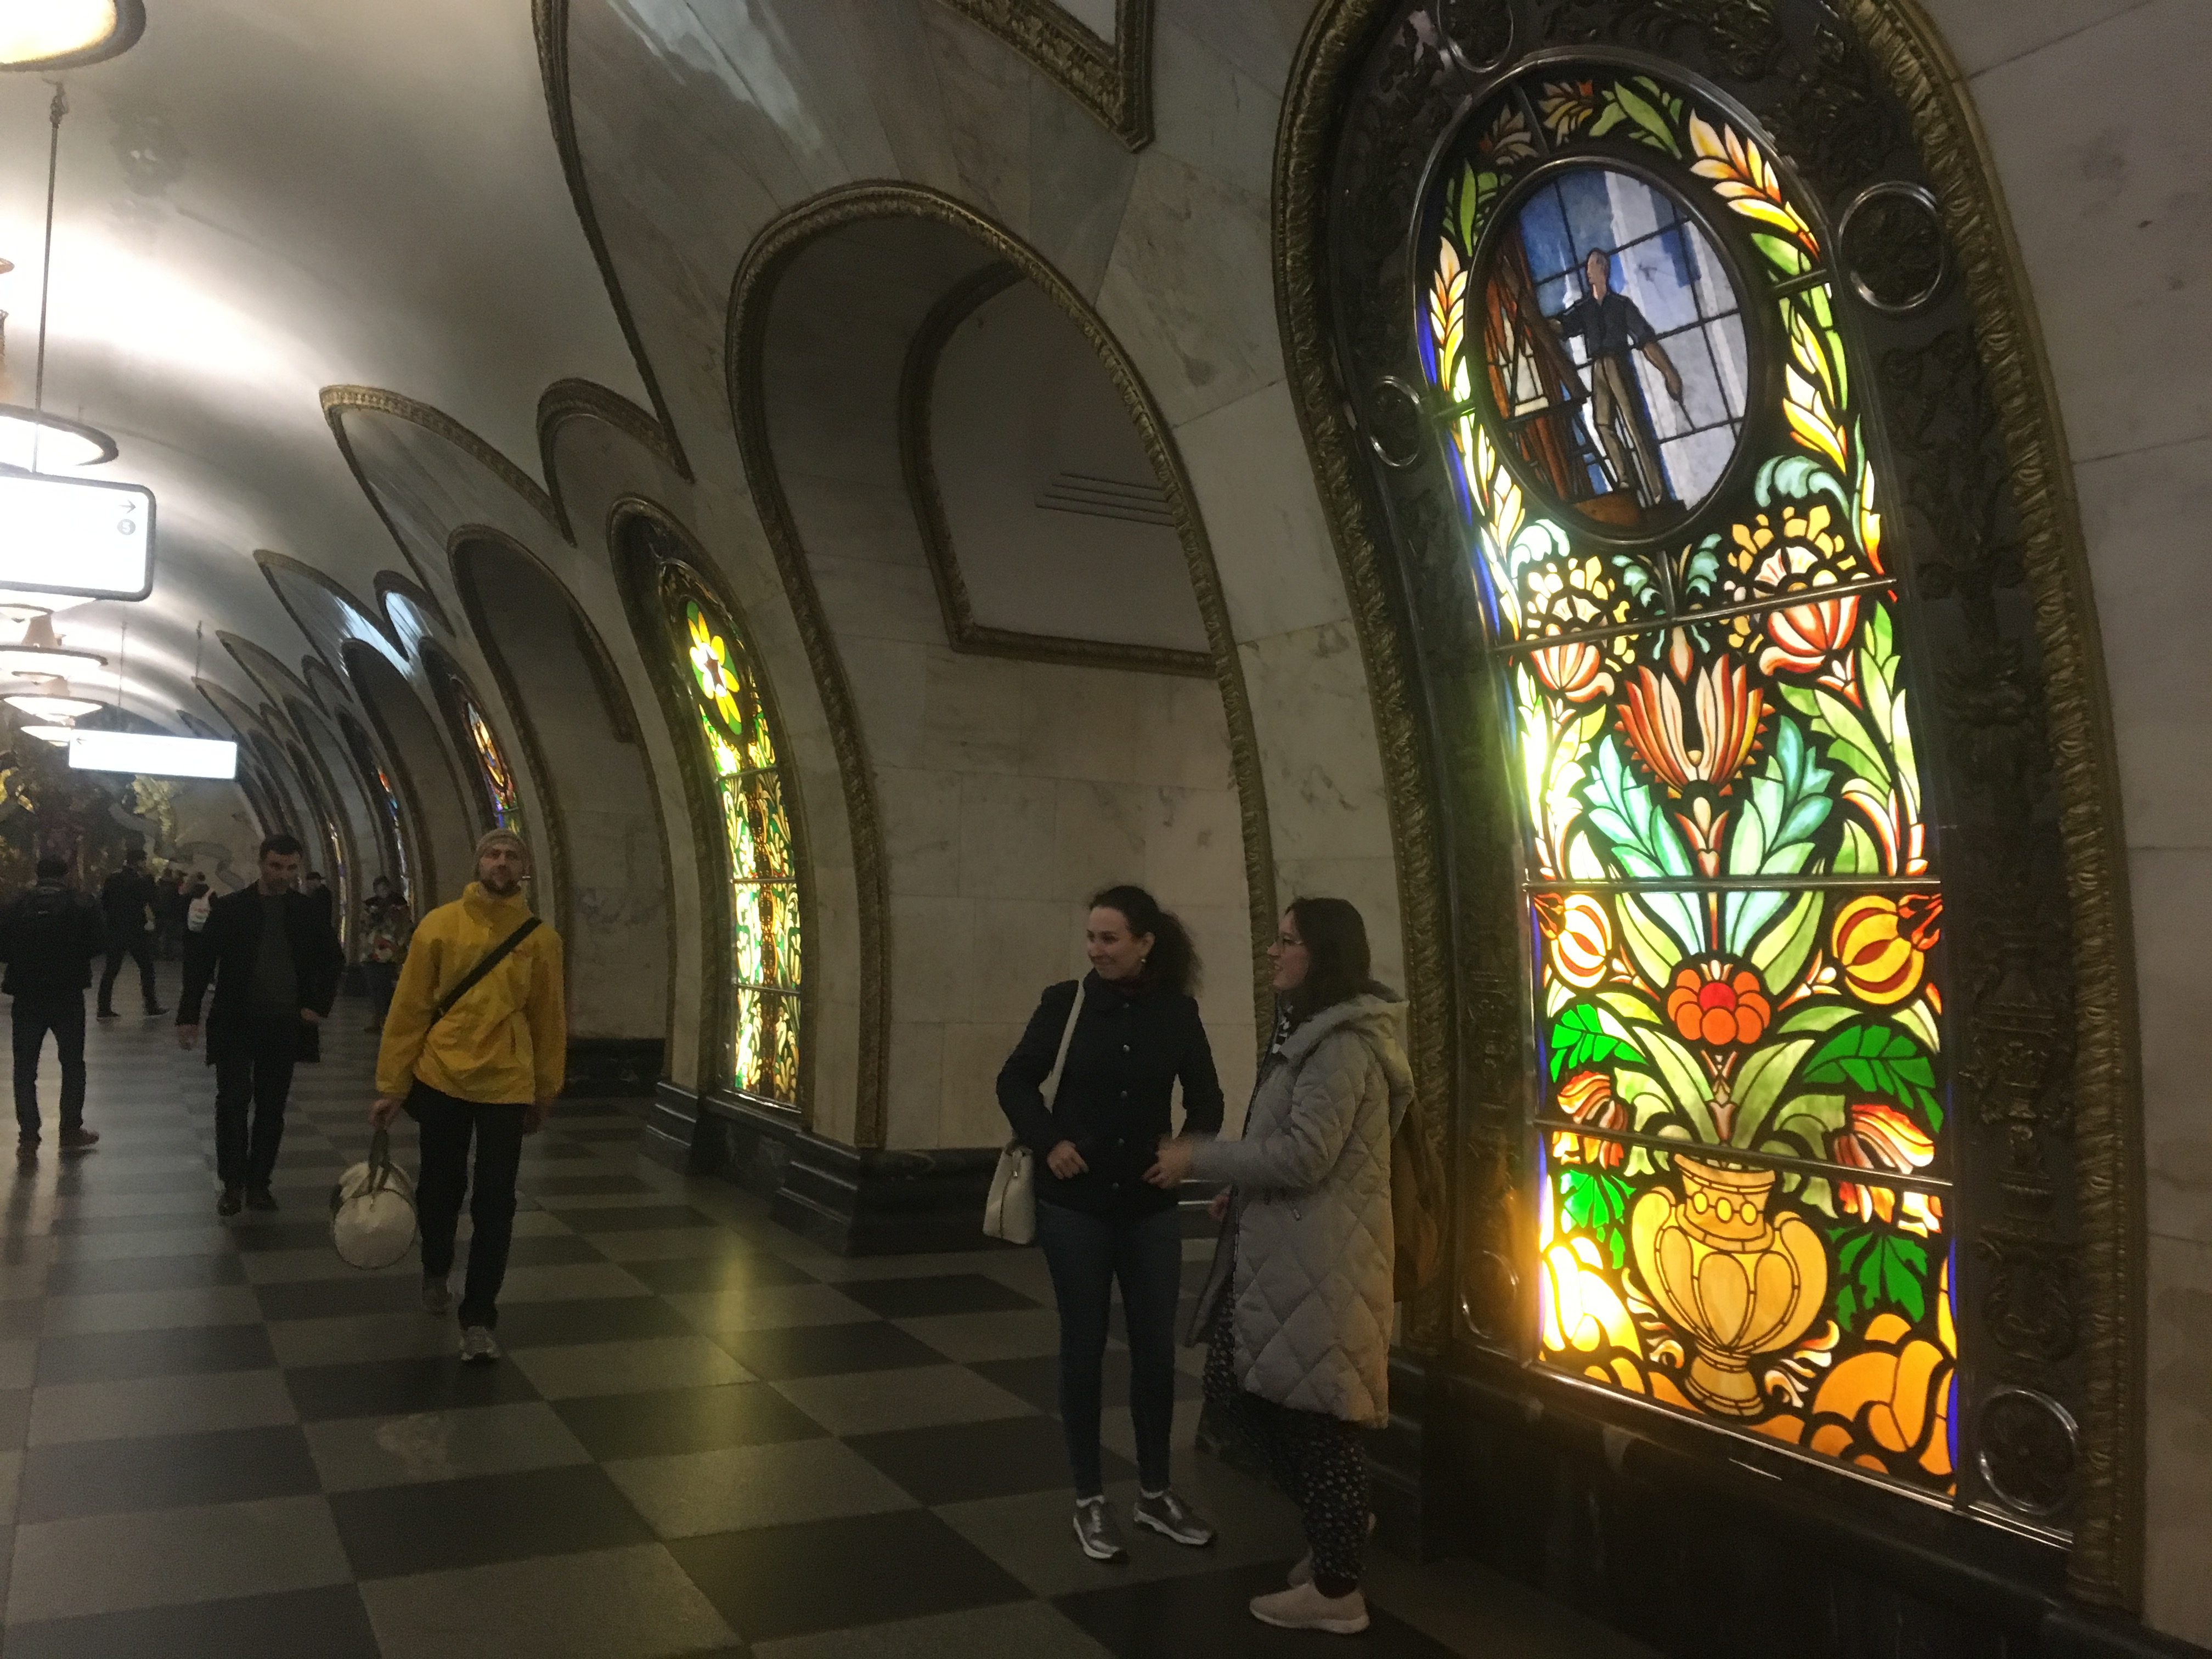 Novoslobodskaya Station is known as the Cathedral Station